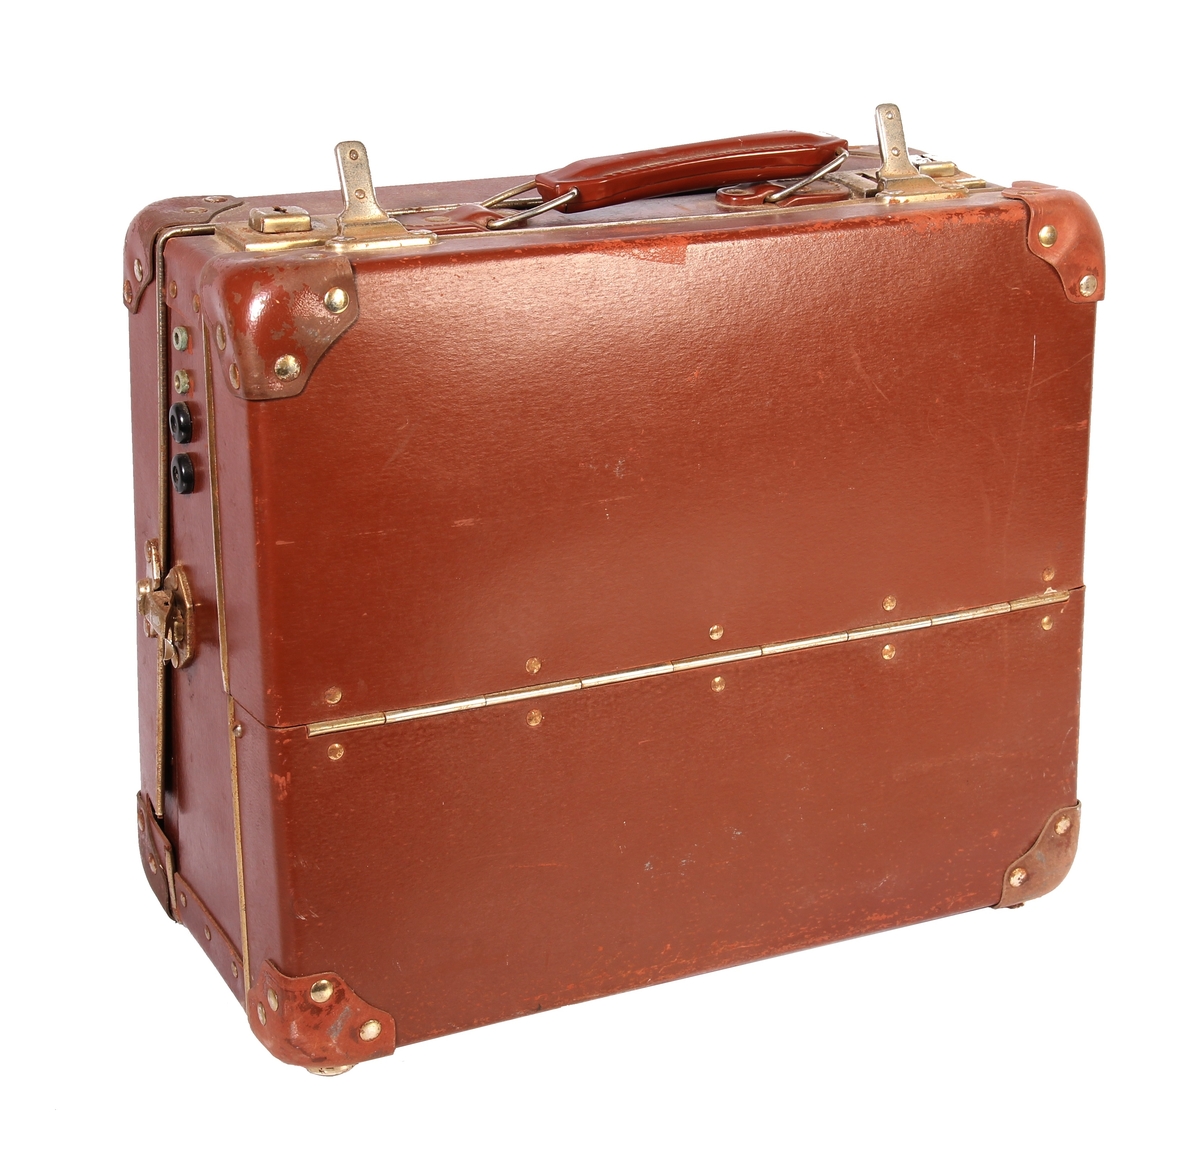 Reiseradio utformet som en koffert.